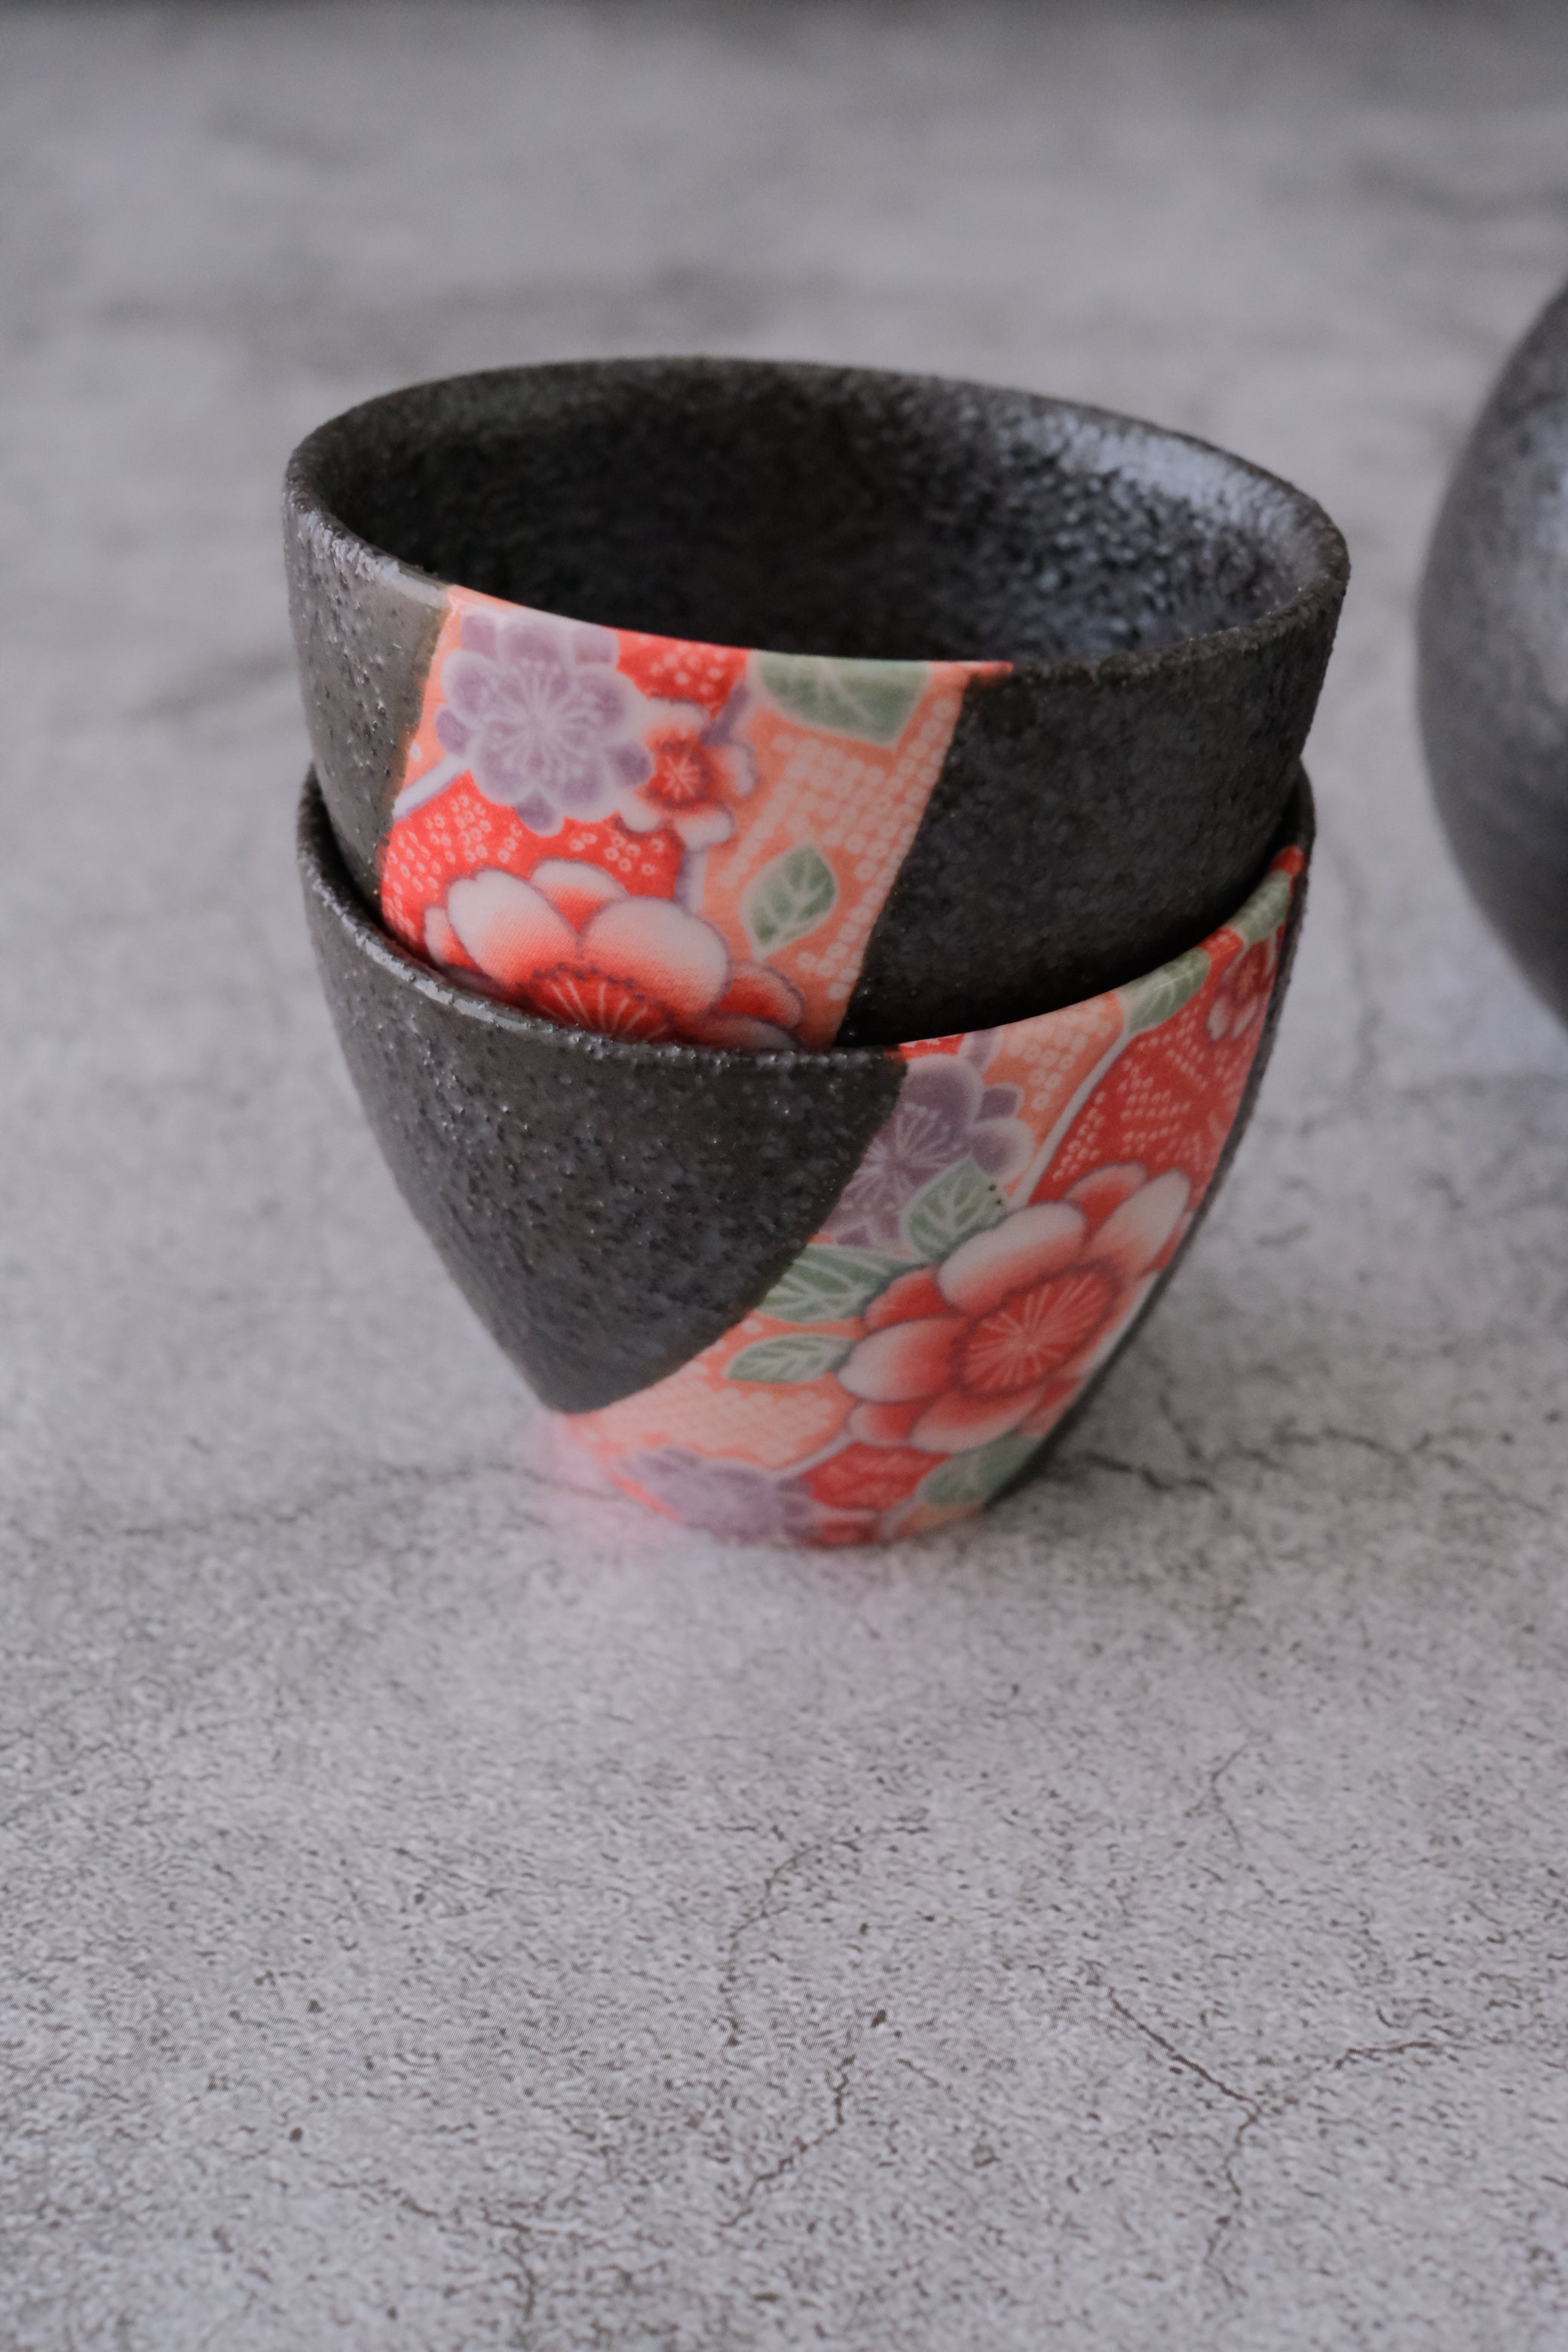 Kyo Yuzen Black Round Tea Pot & Tea Cup Set